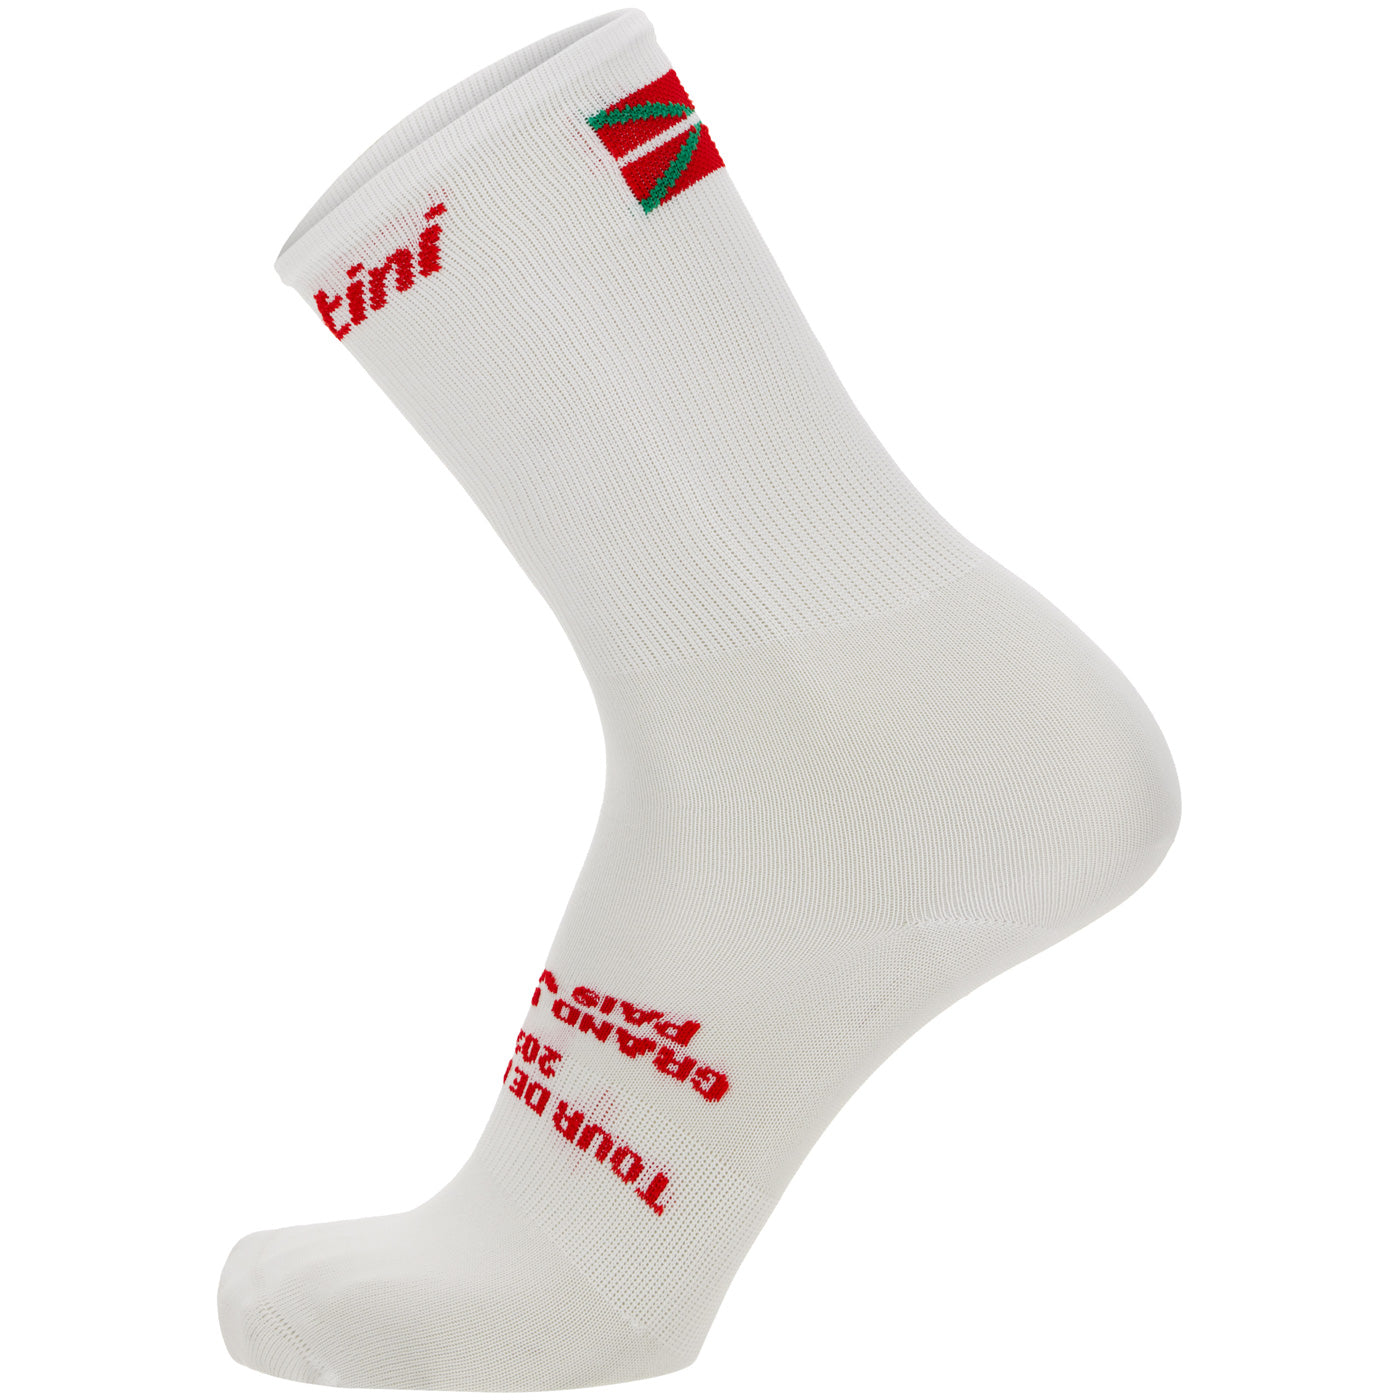 Tour de France socks - Gran Depart Pais Vasco